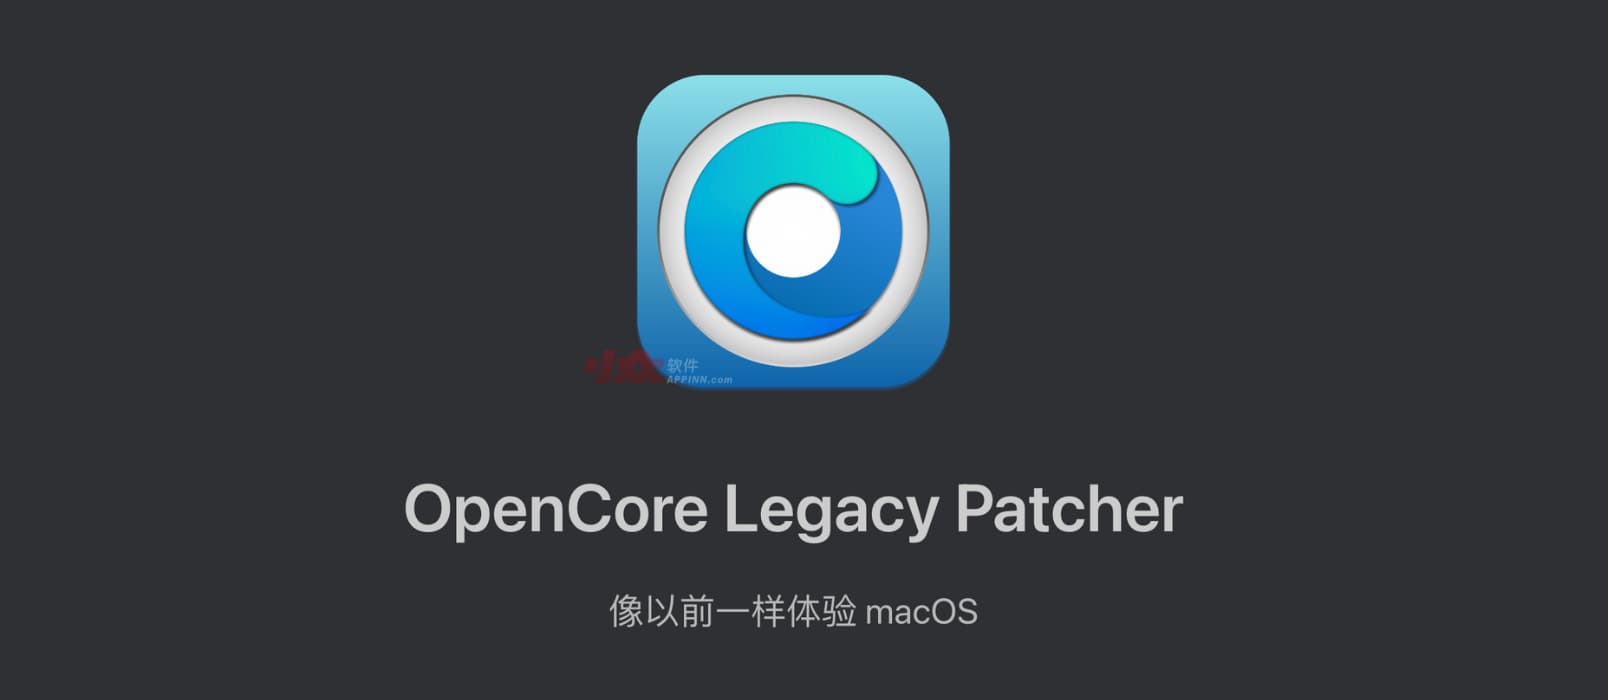 OpenCore Legacy Patcher - 为老款 Mac 电脑（2006 年以后）安装最新 macOS 操作系统